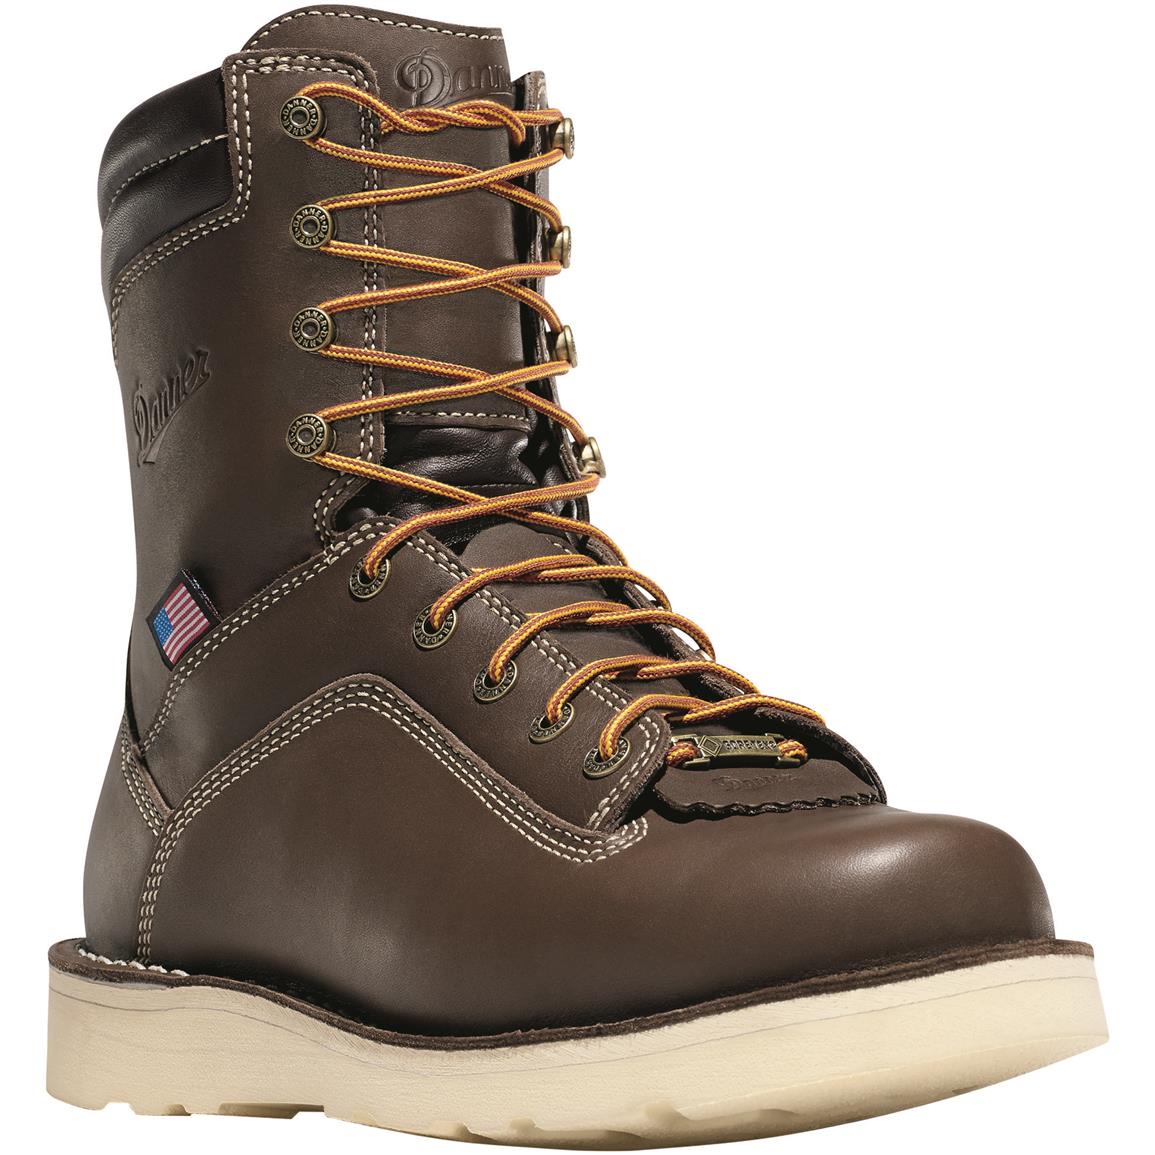 Danner Men's Quarry USA Waterproof 8" Wedge Alloy Toe Work Boots, Brown